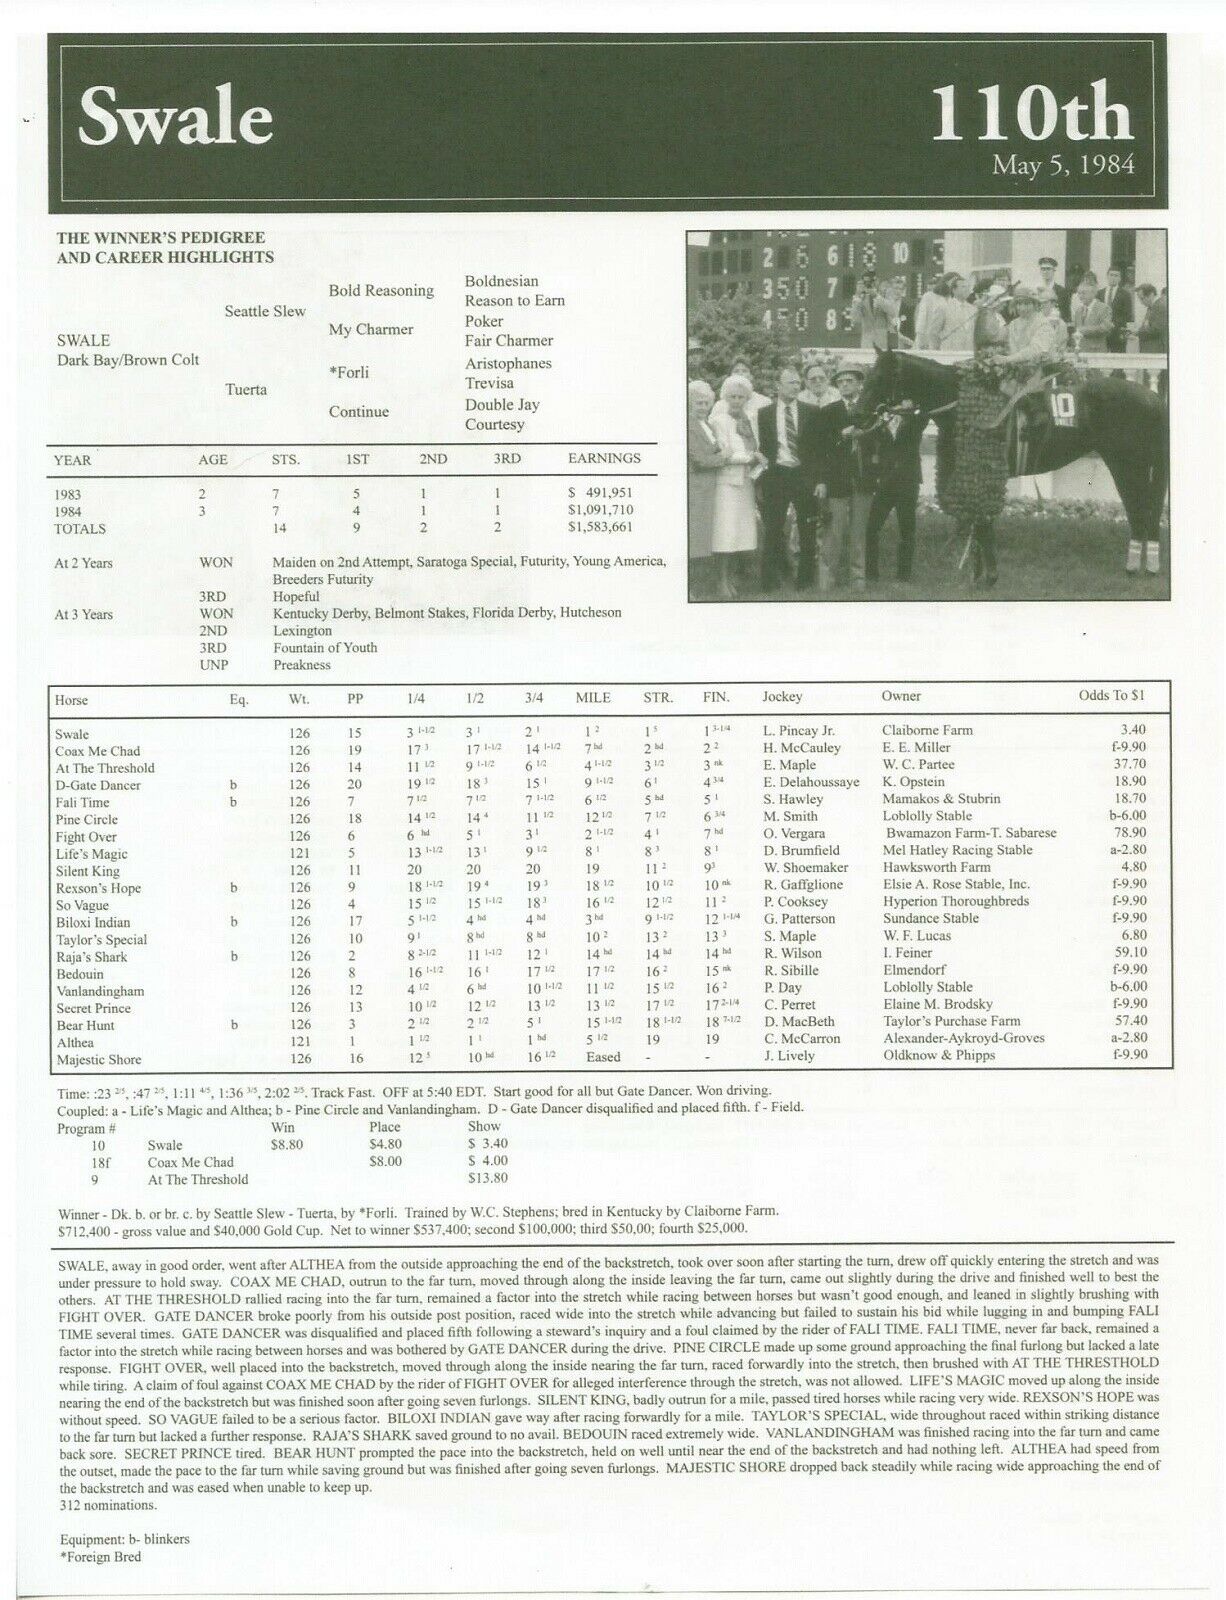 1984 SWALE Kentucky Derby Race Chart, Pedigree & Career Highlights